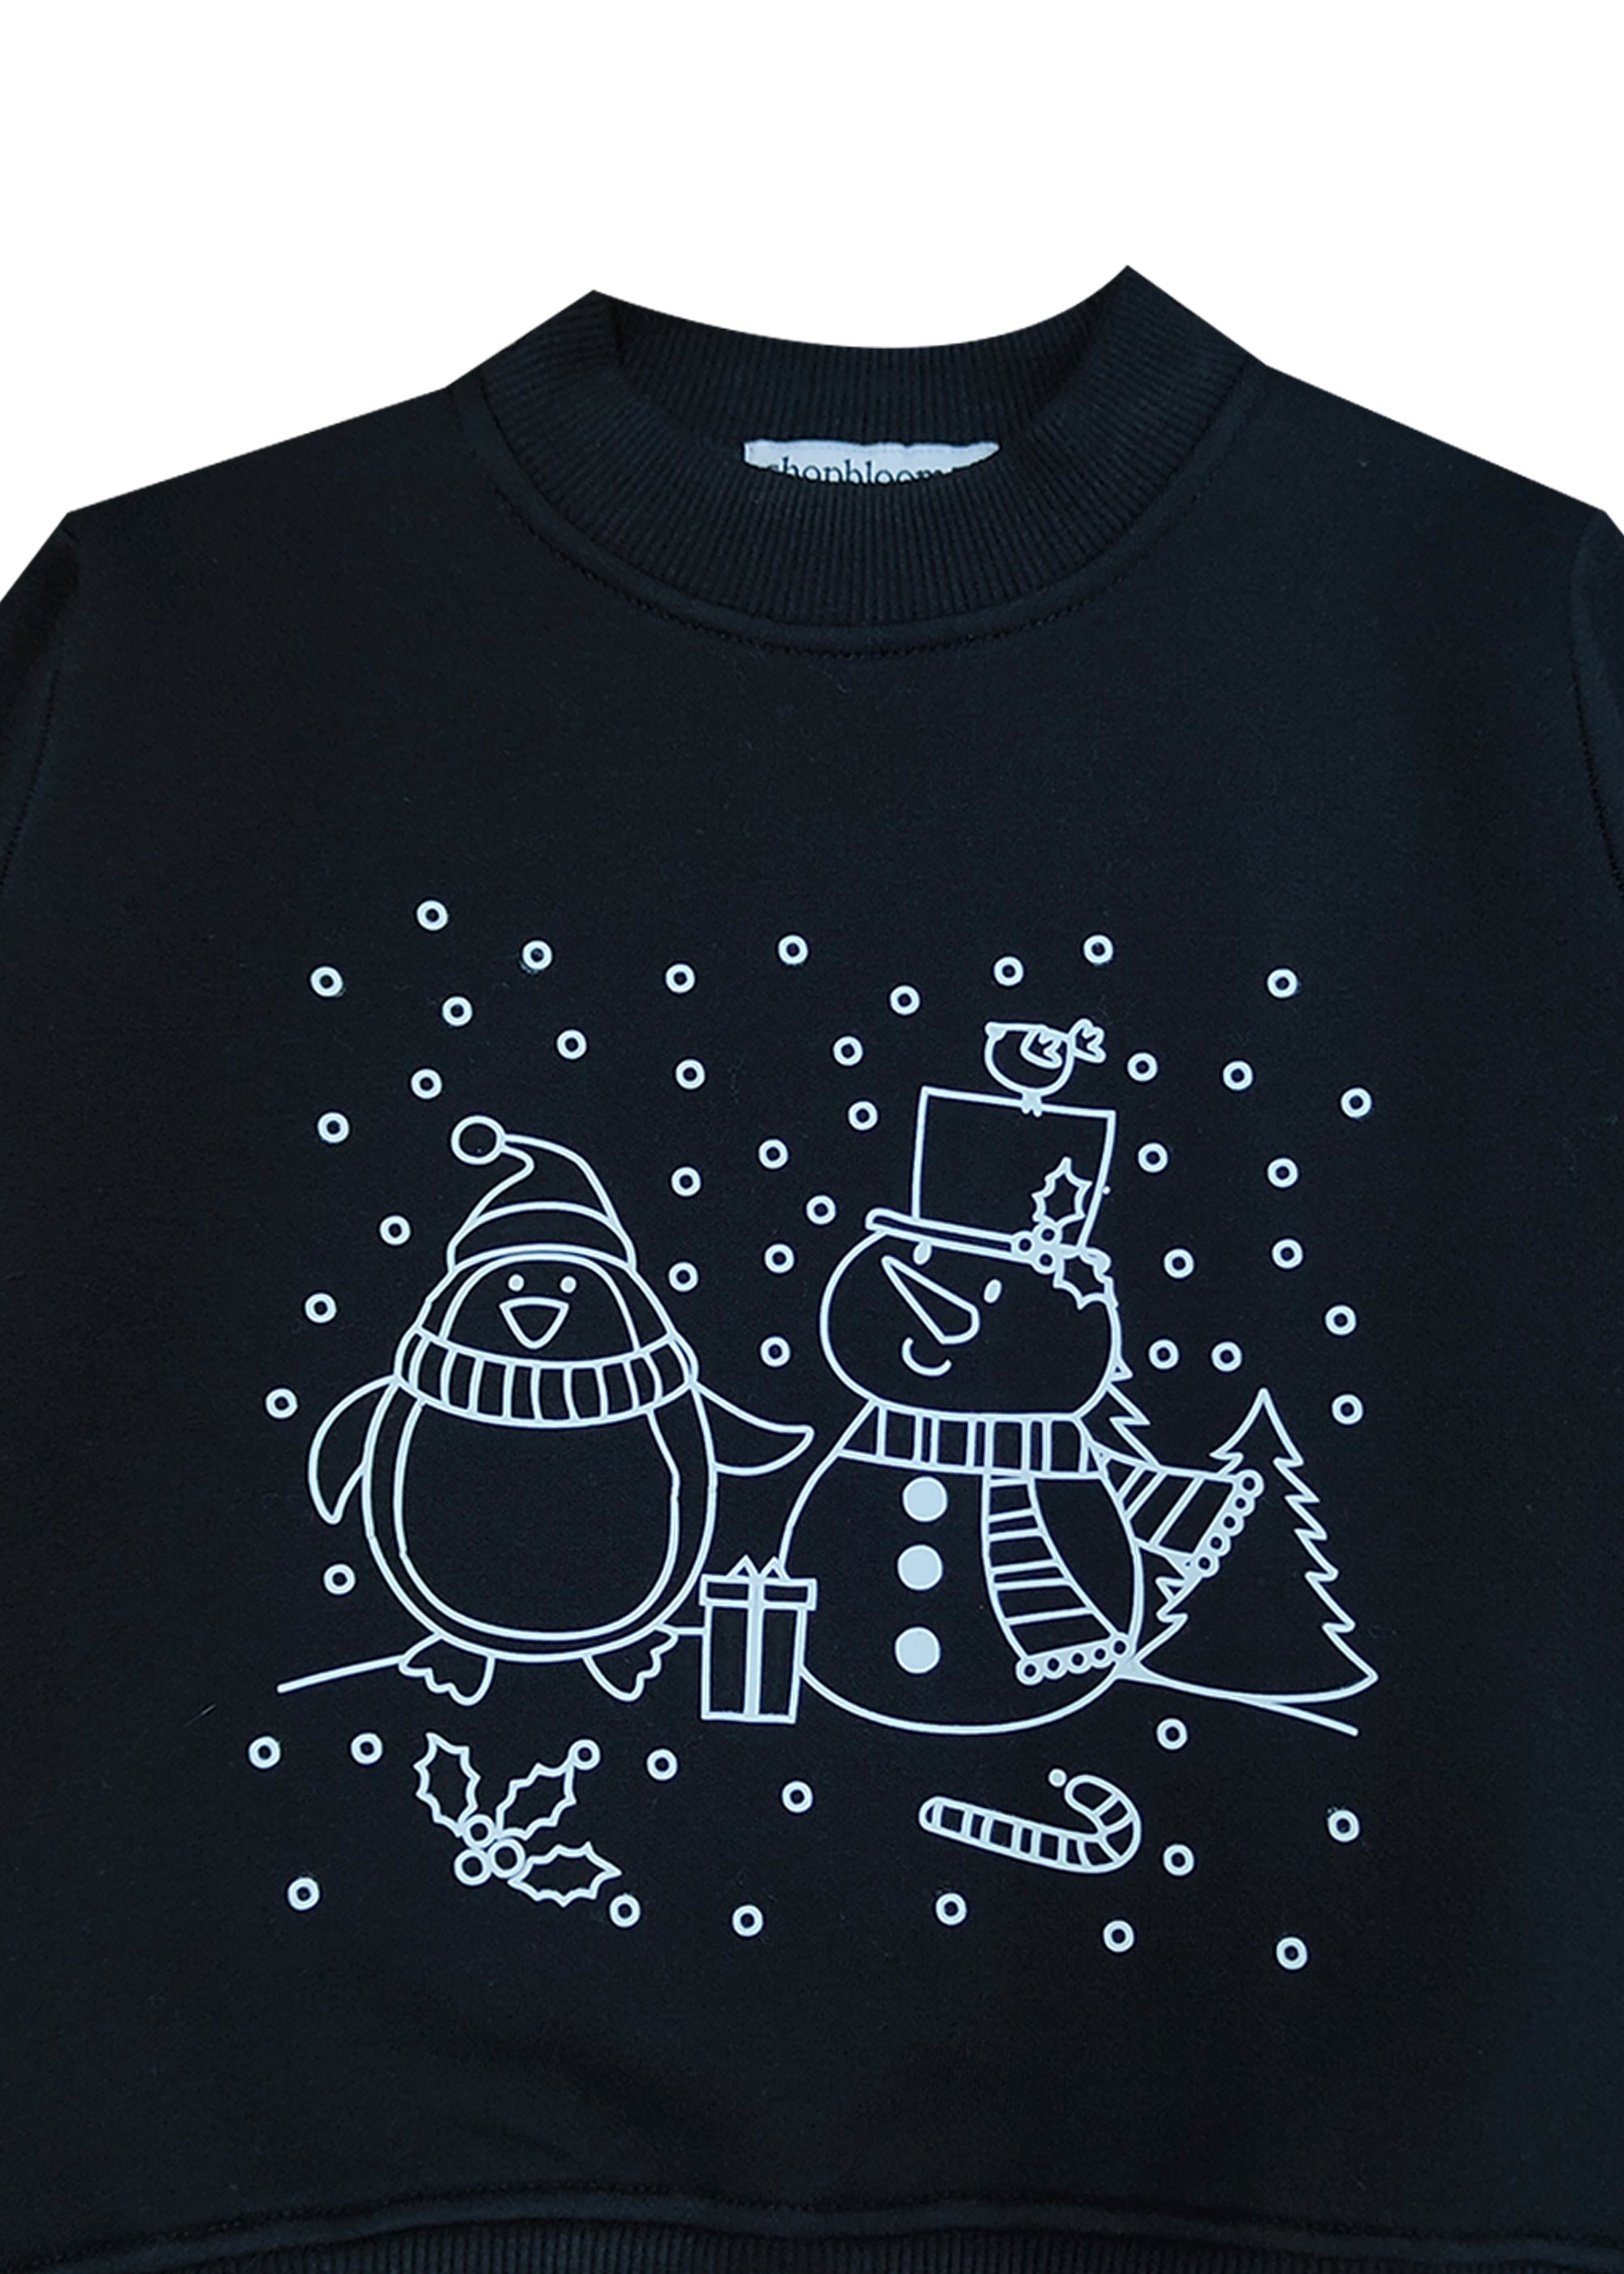 Glow In The Dark Snowman Warm Fleece Kids Sweatshirt